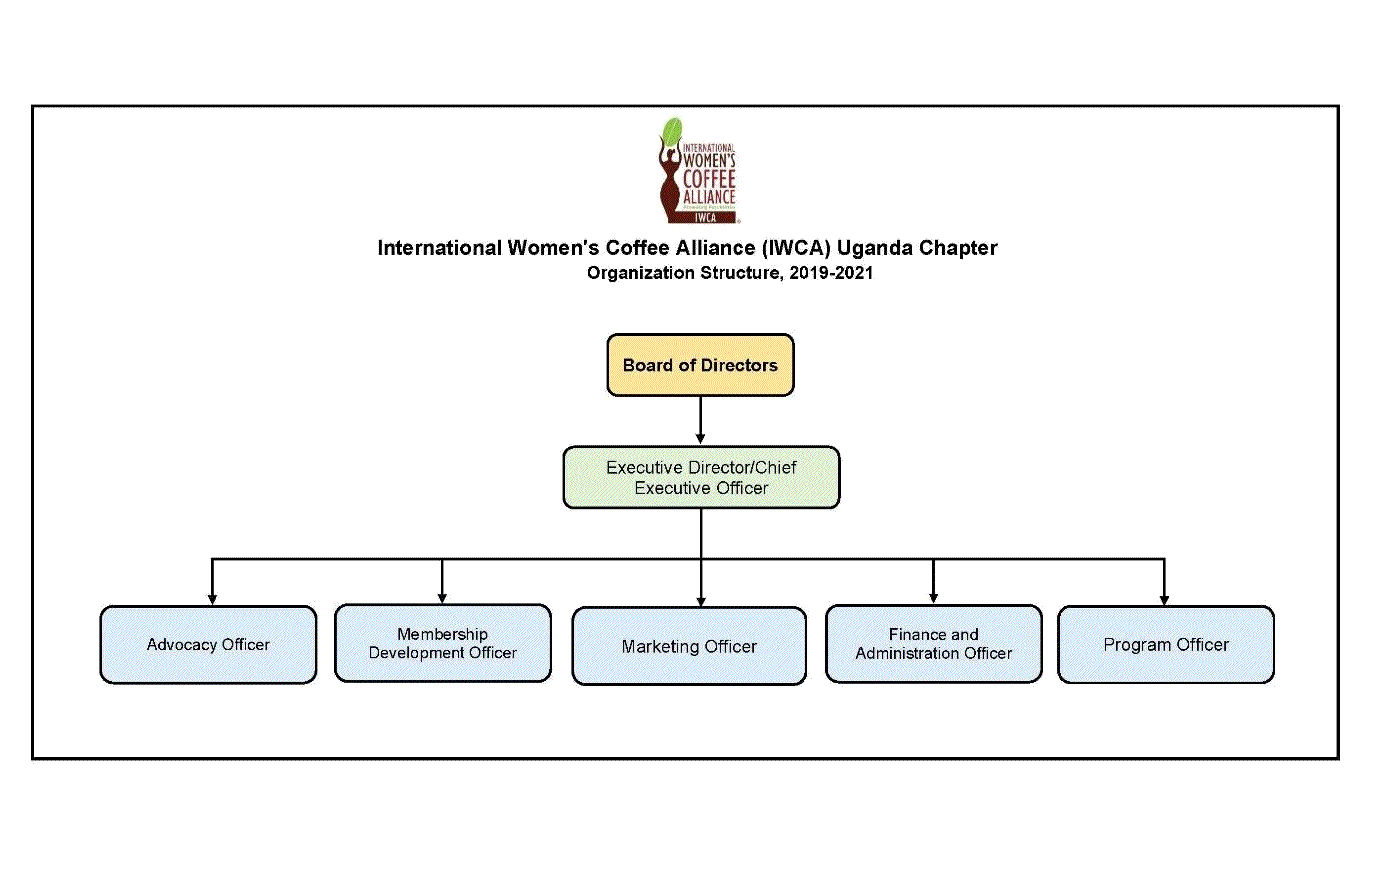 IWCA Uganda Chapter - Organization Structure